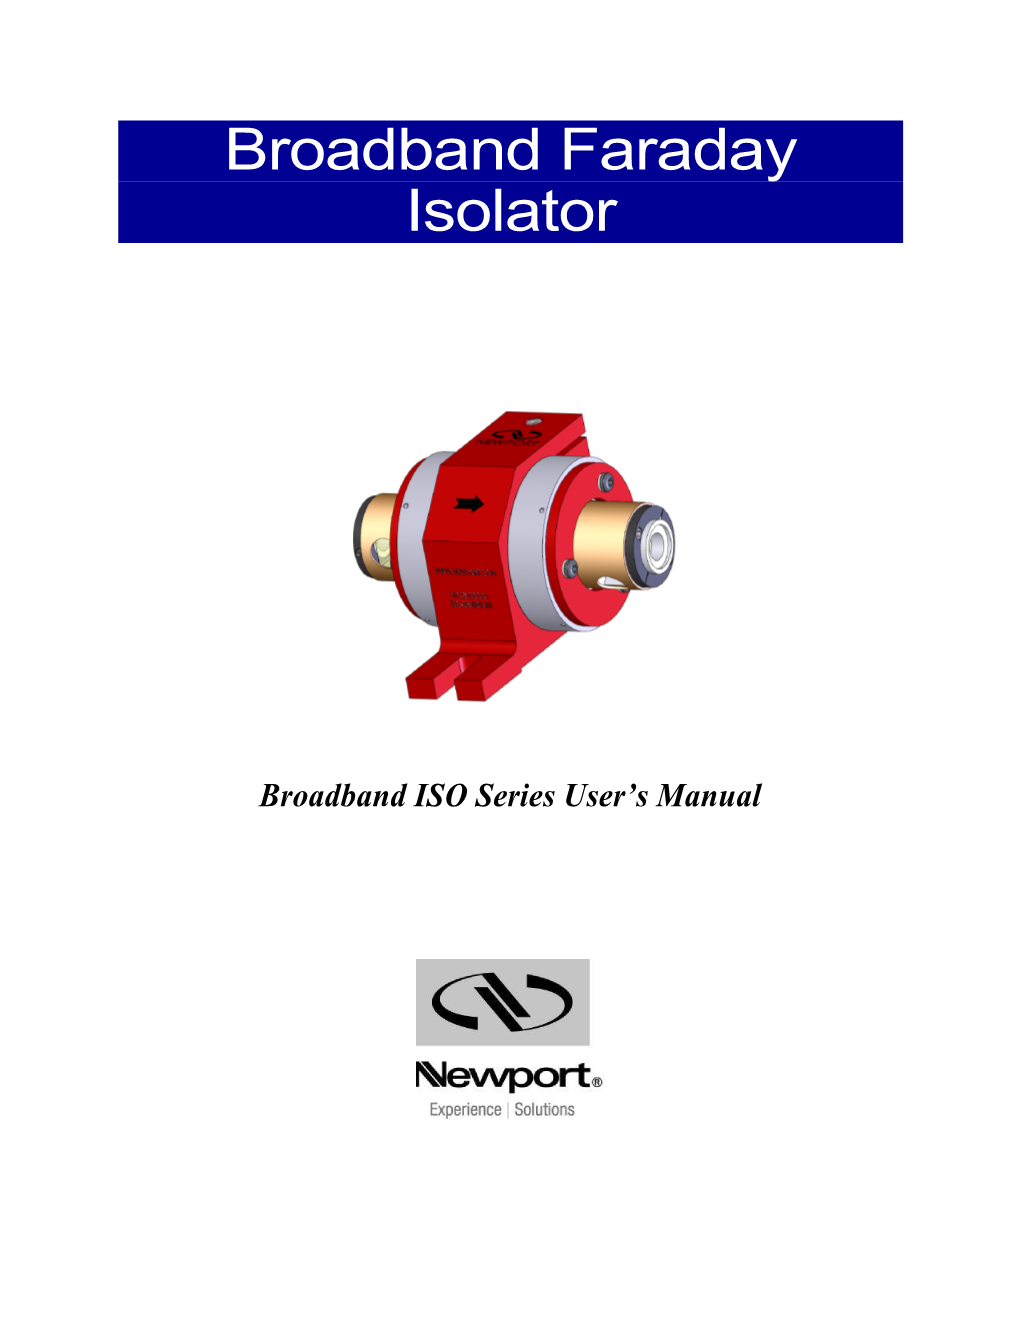 Broadband Faraday Isolator